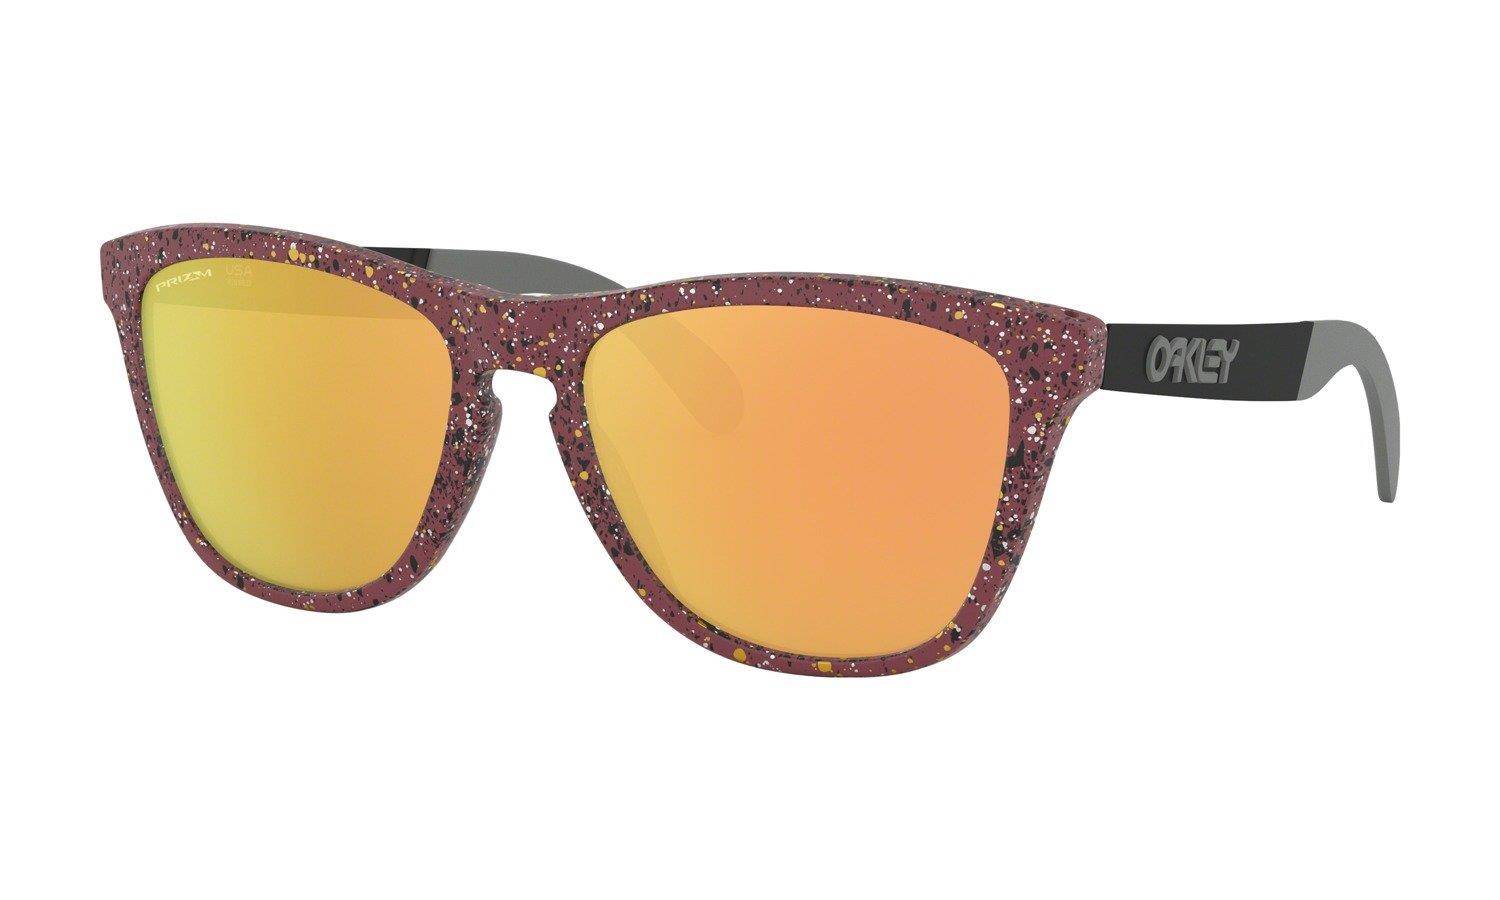 gold oakley sunglasses